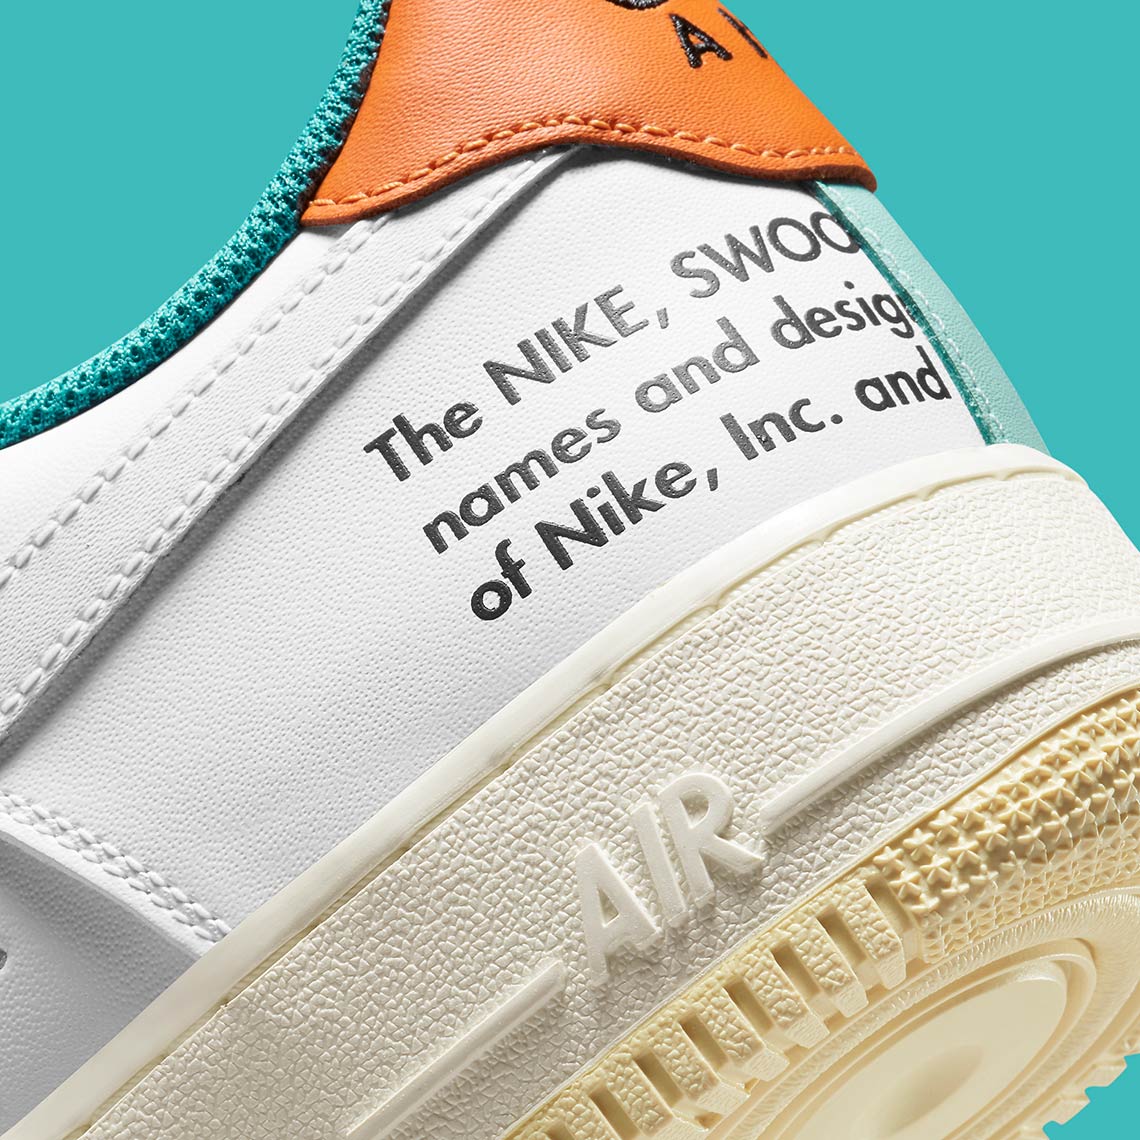 Nike Air Force 1 Starfish DM0970-111 | SneakerNews.com